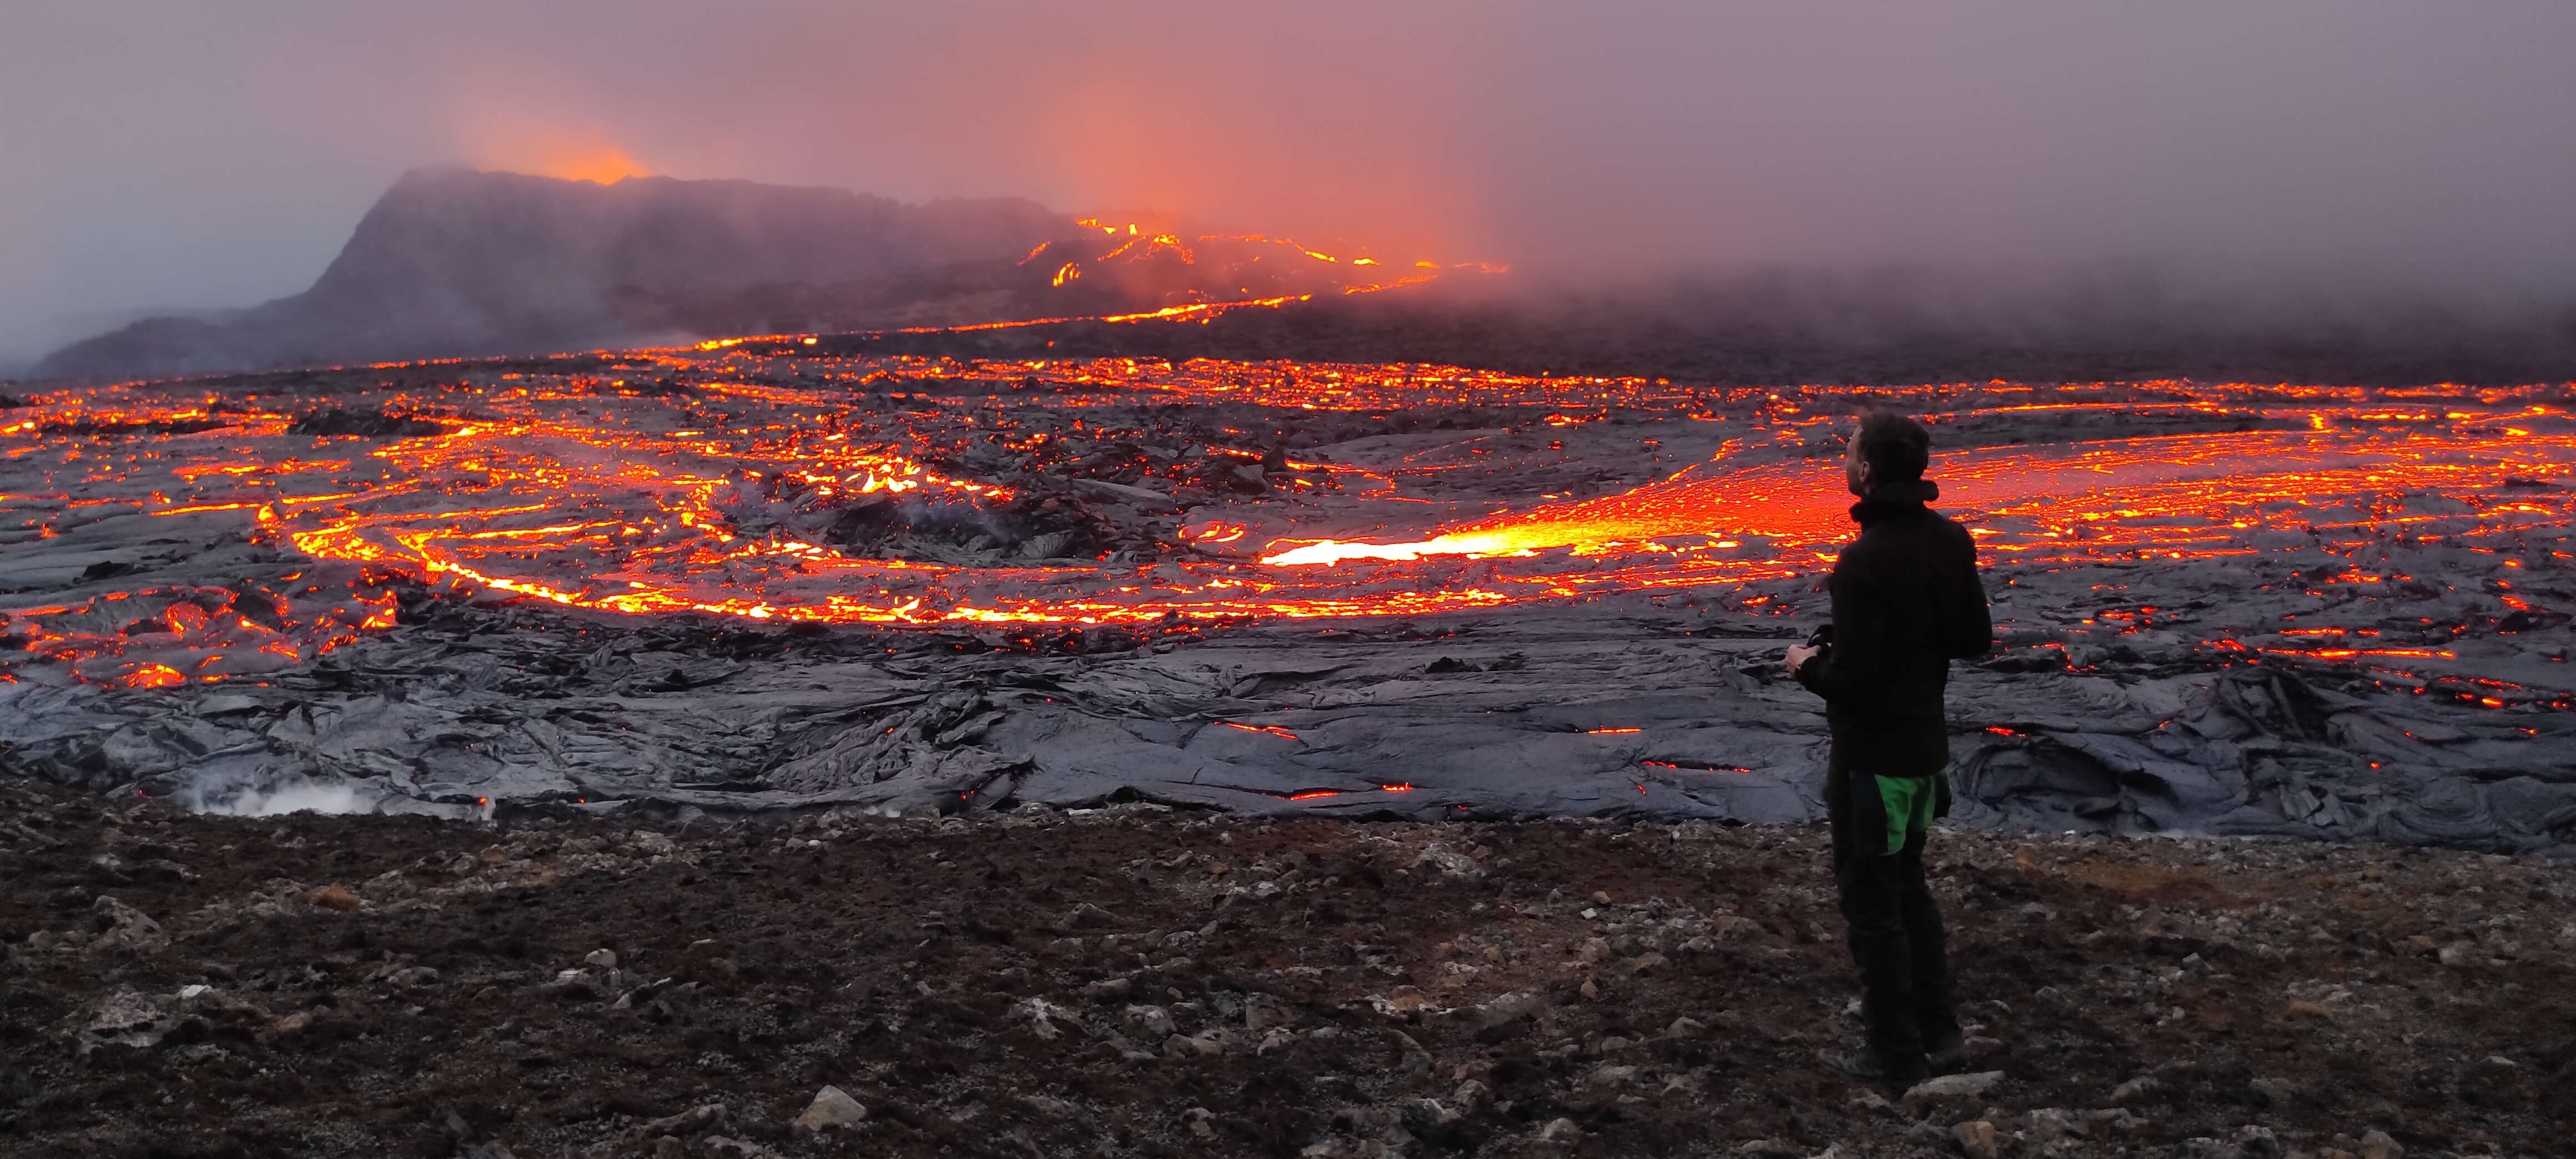 Kalnų fanai prie ugnikalnio Islandijoje